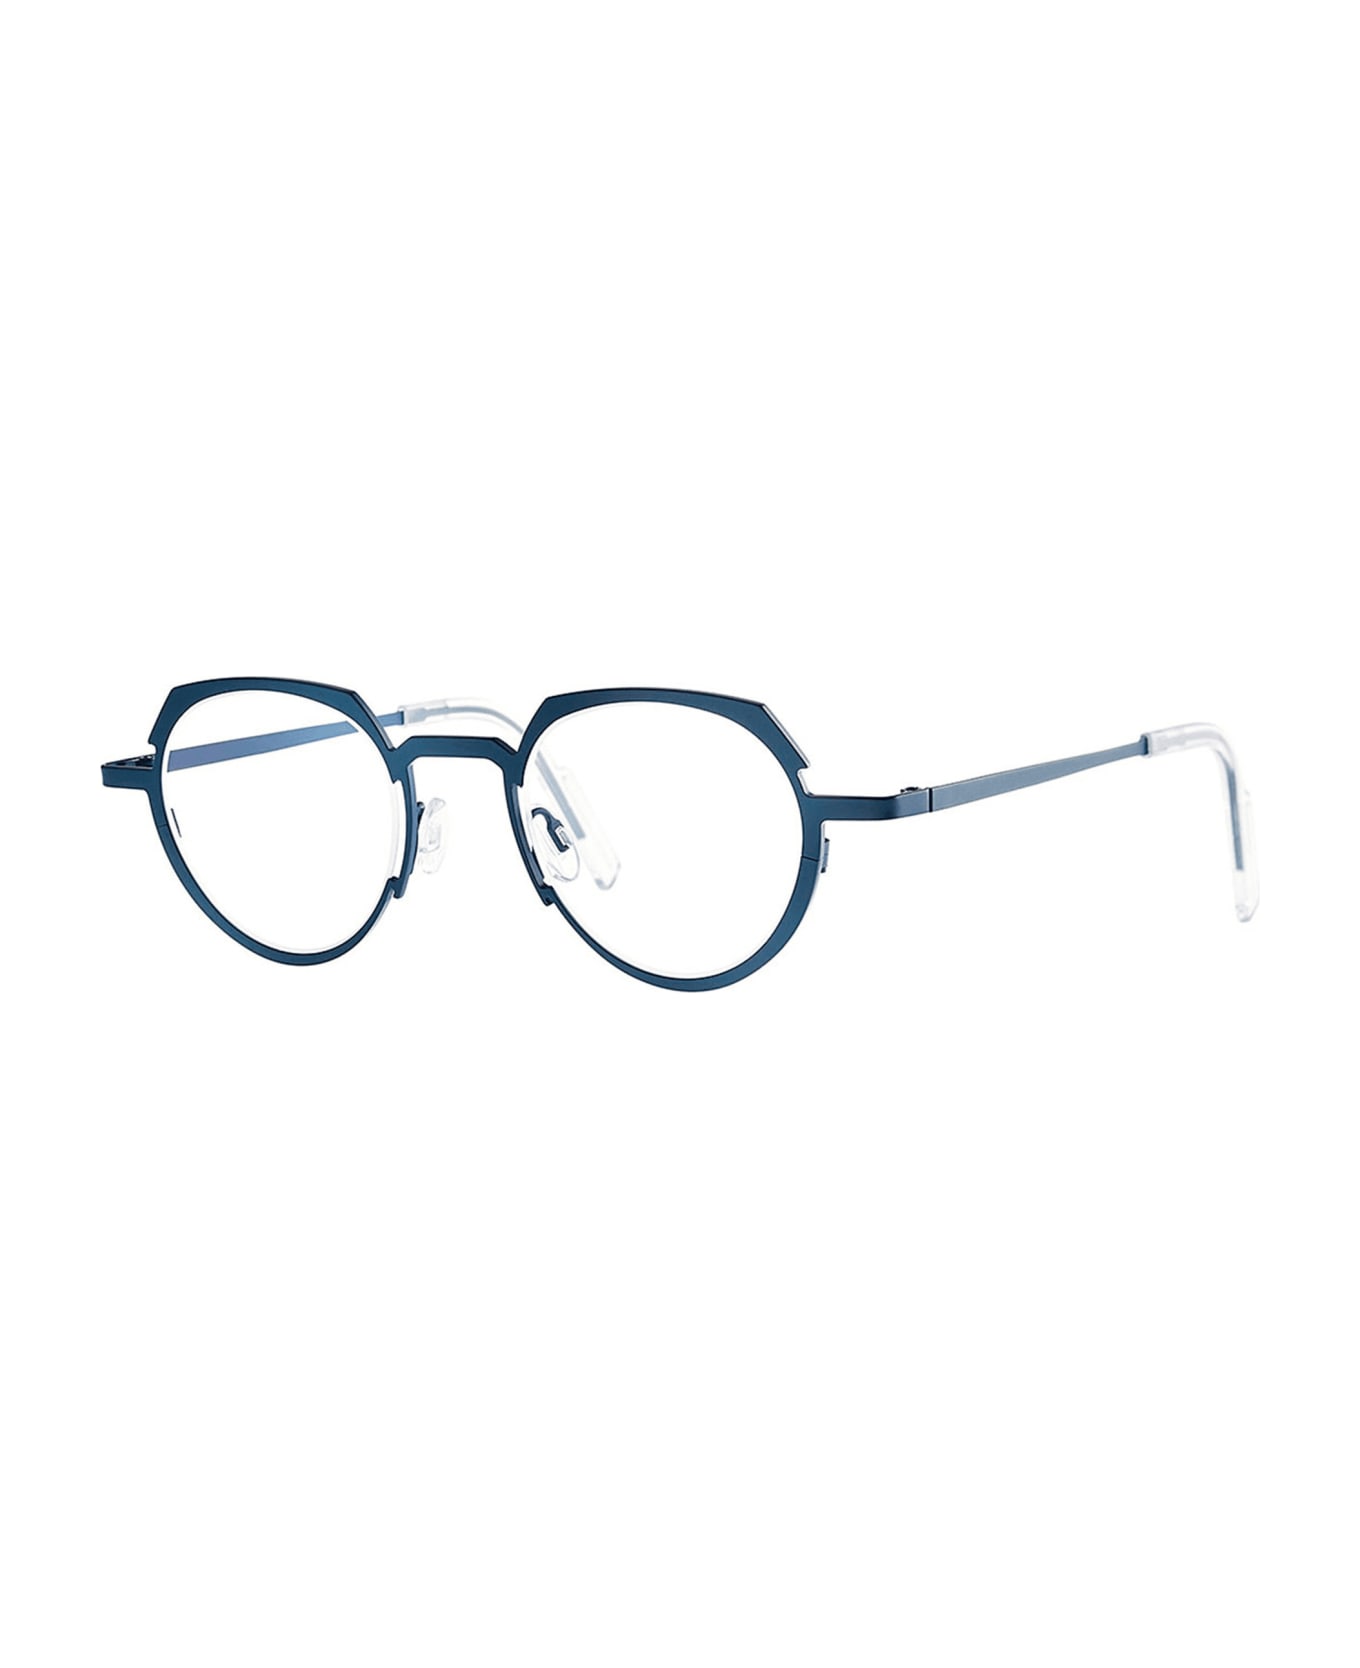 Theo Eyewear Receiver - 353 Dark Night Rx Glasses - Blue Navy アイウェア